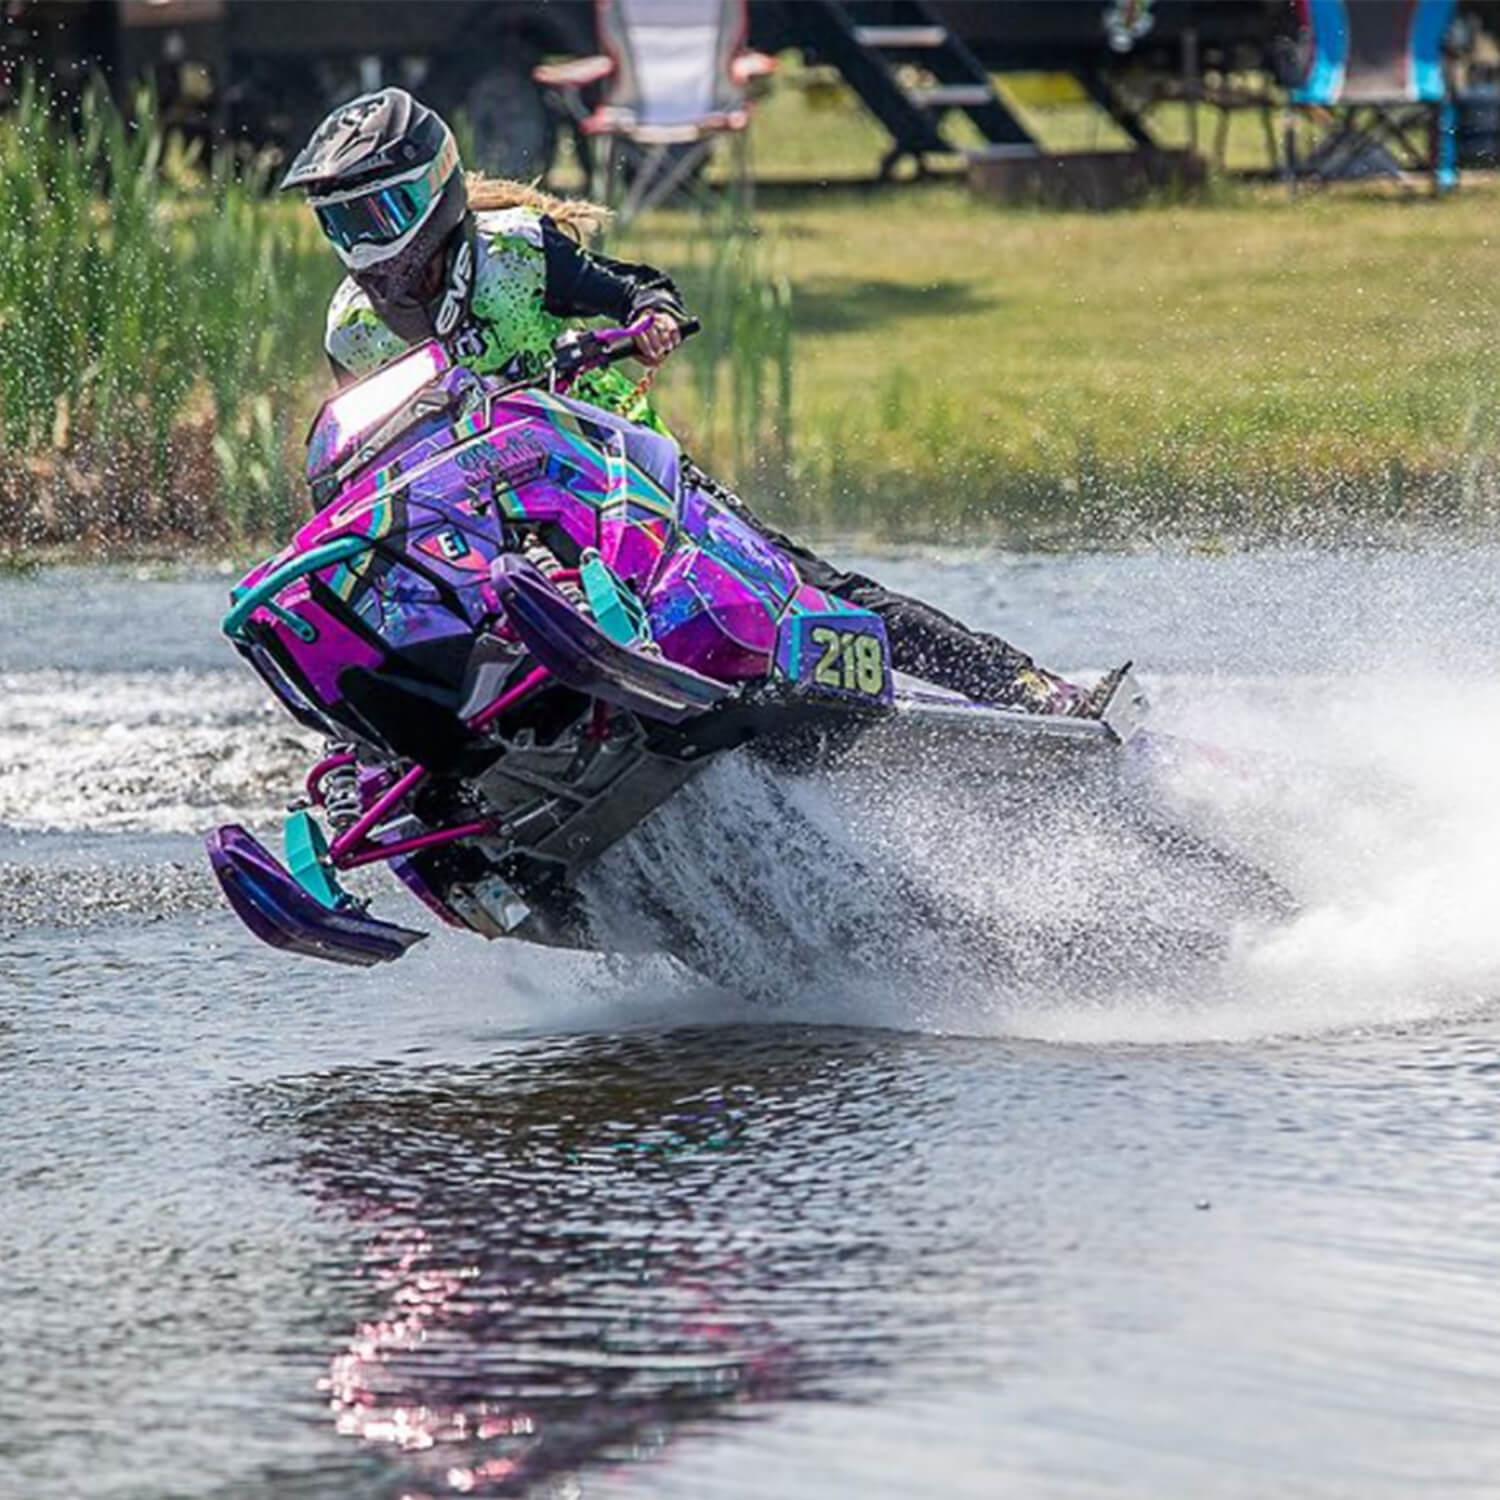 Erika Whitaker watercross racer, racing snowmobile on the water with C&A Pro purple Mini skis